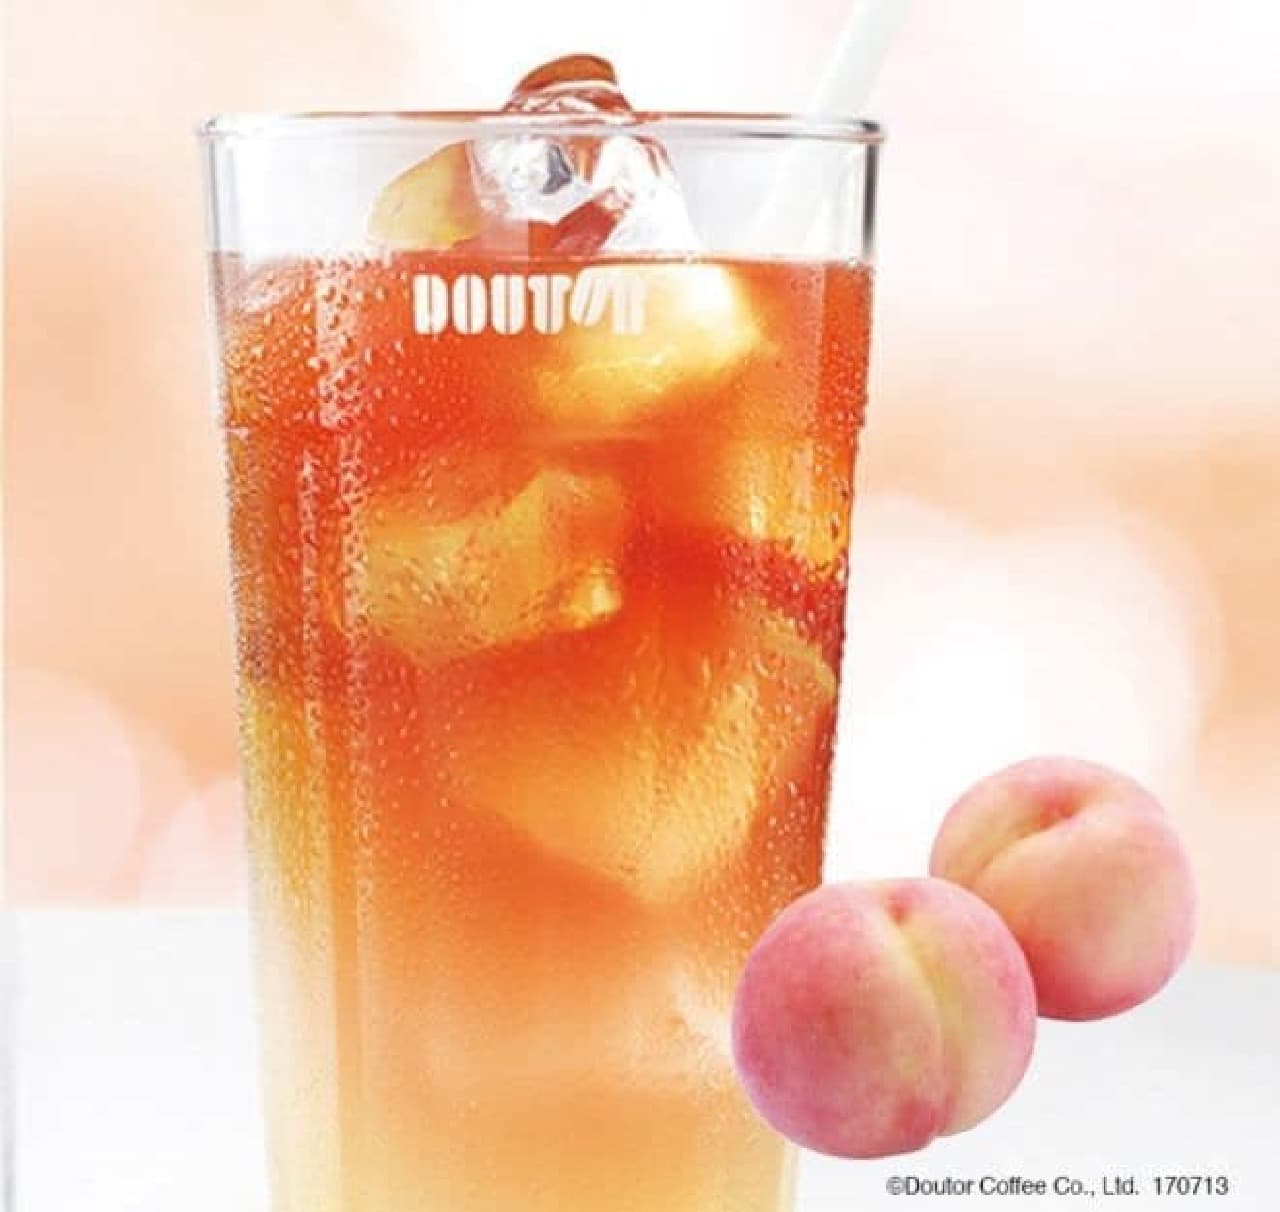 "Momo tea" is a fruit tea made by combining 100% peach and apple juice with Doutor's original iced tea.